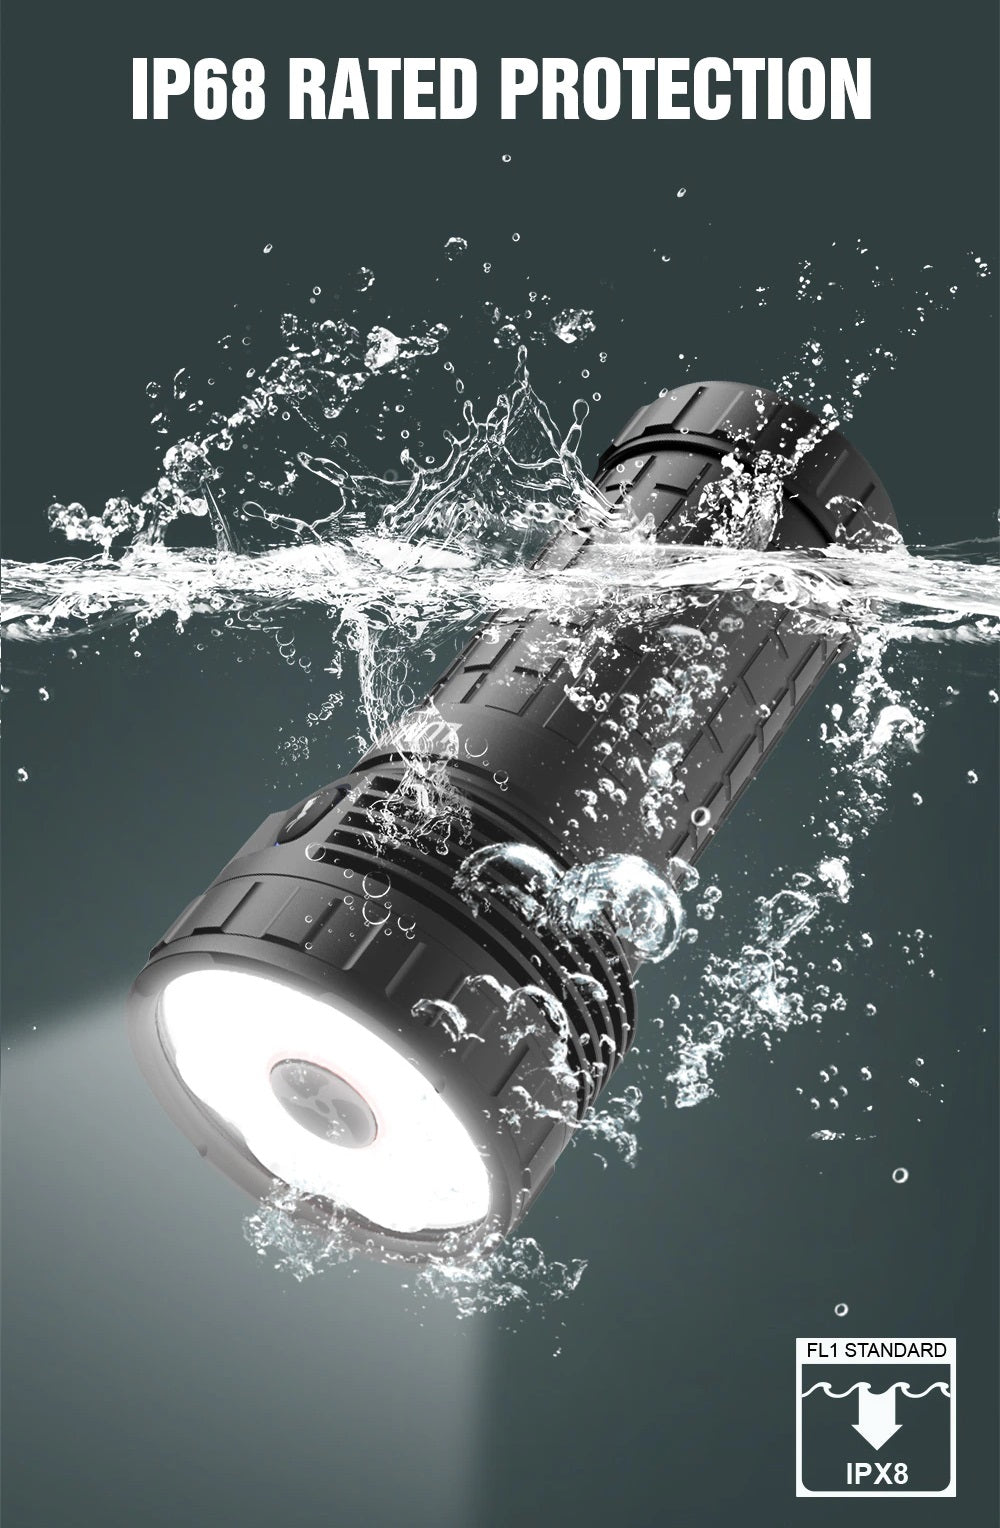 New Lumintop Mach USB Charge 26000 Lumens LED Flashlight Torch